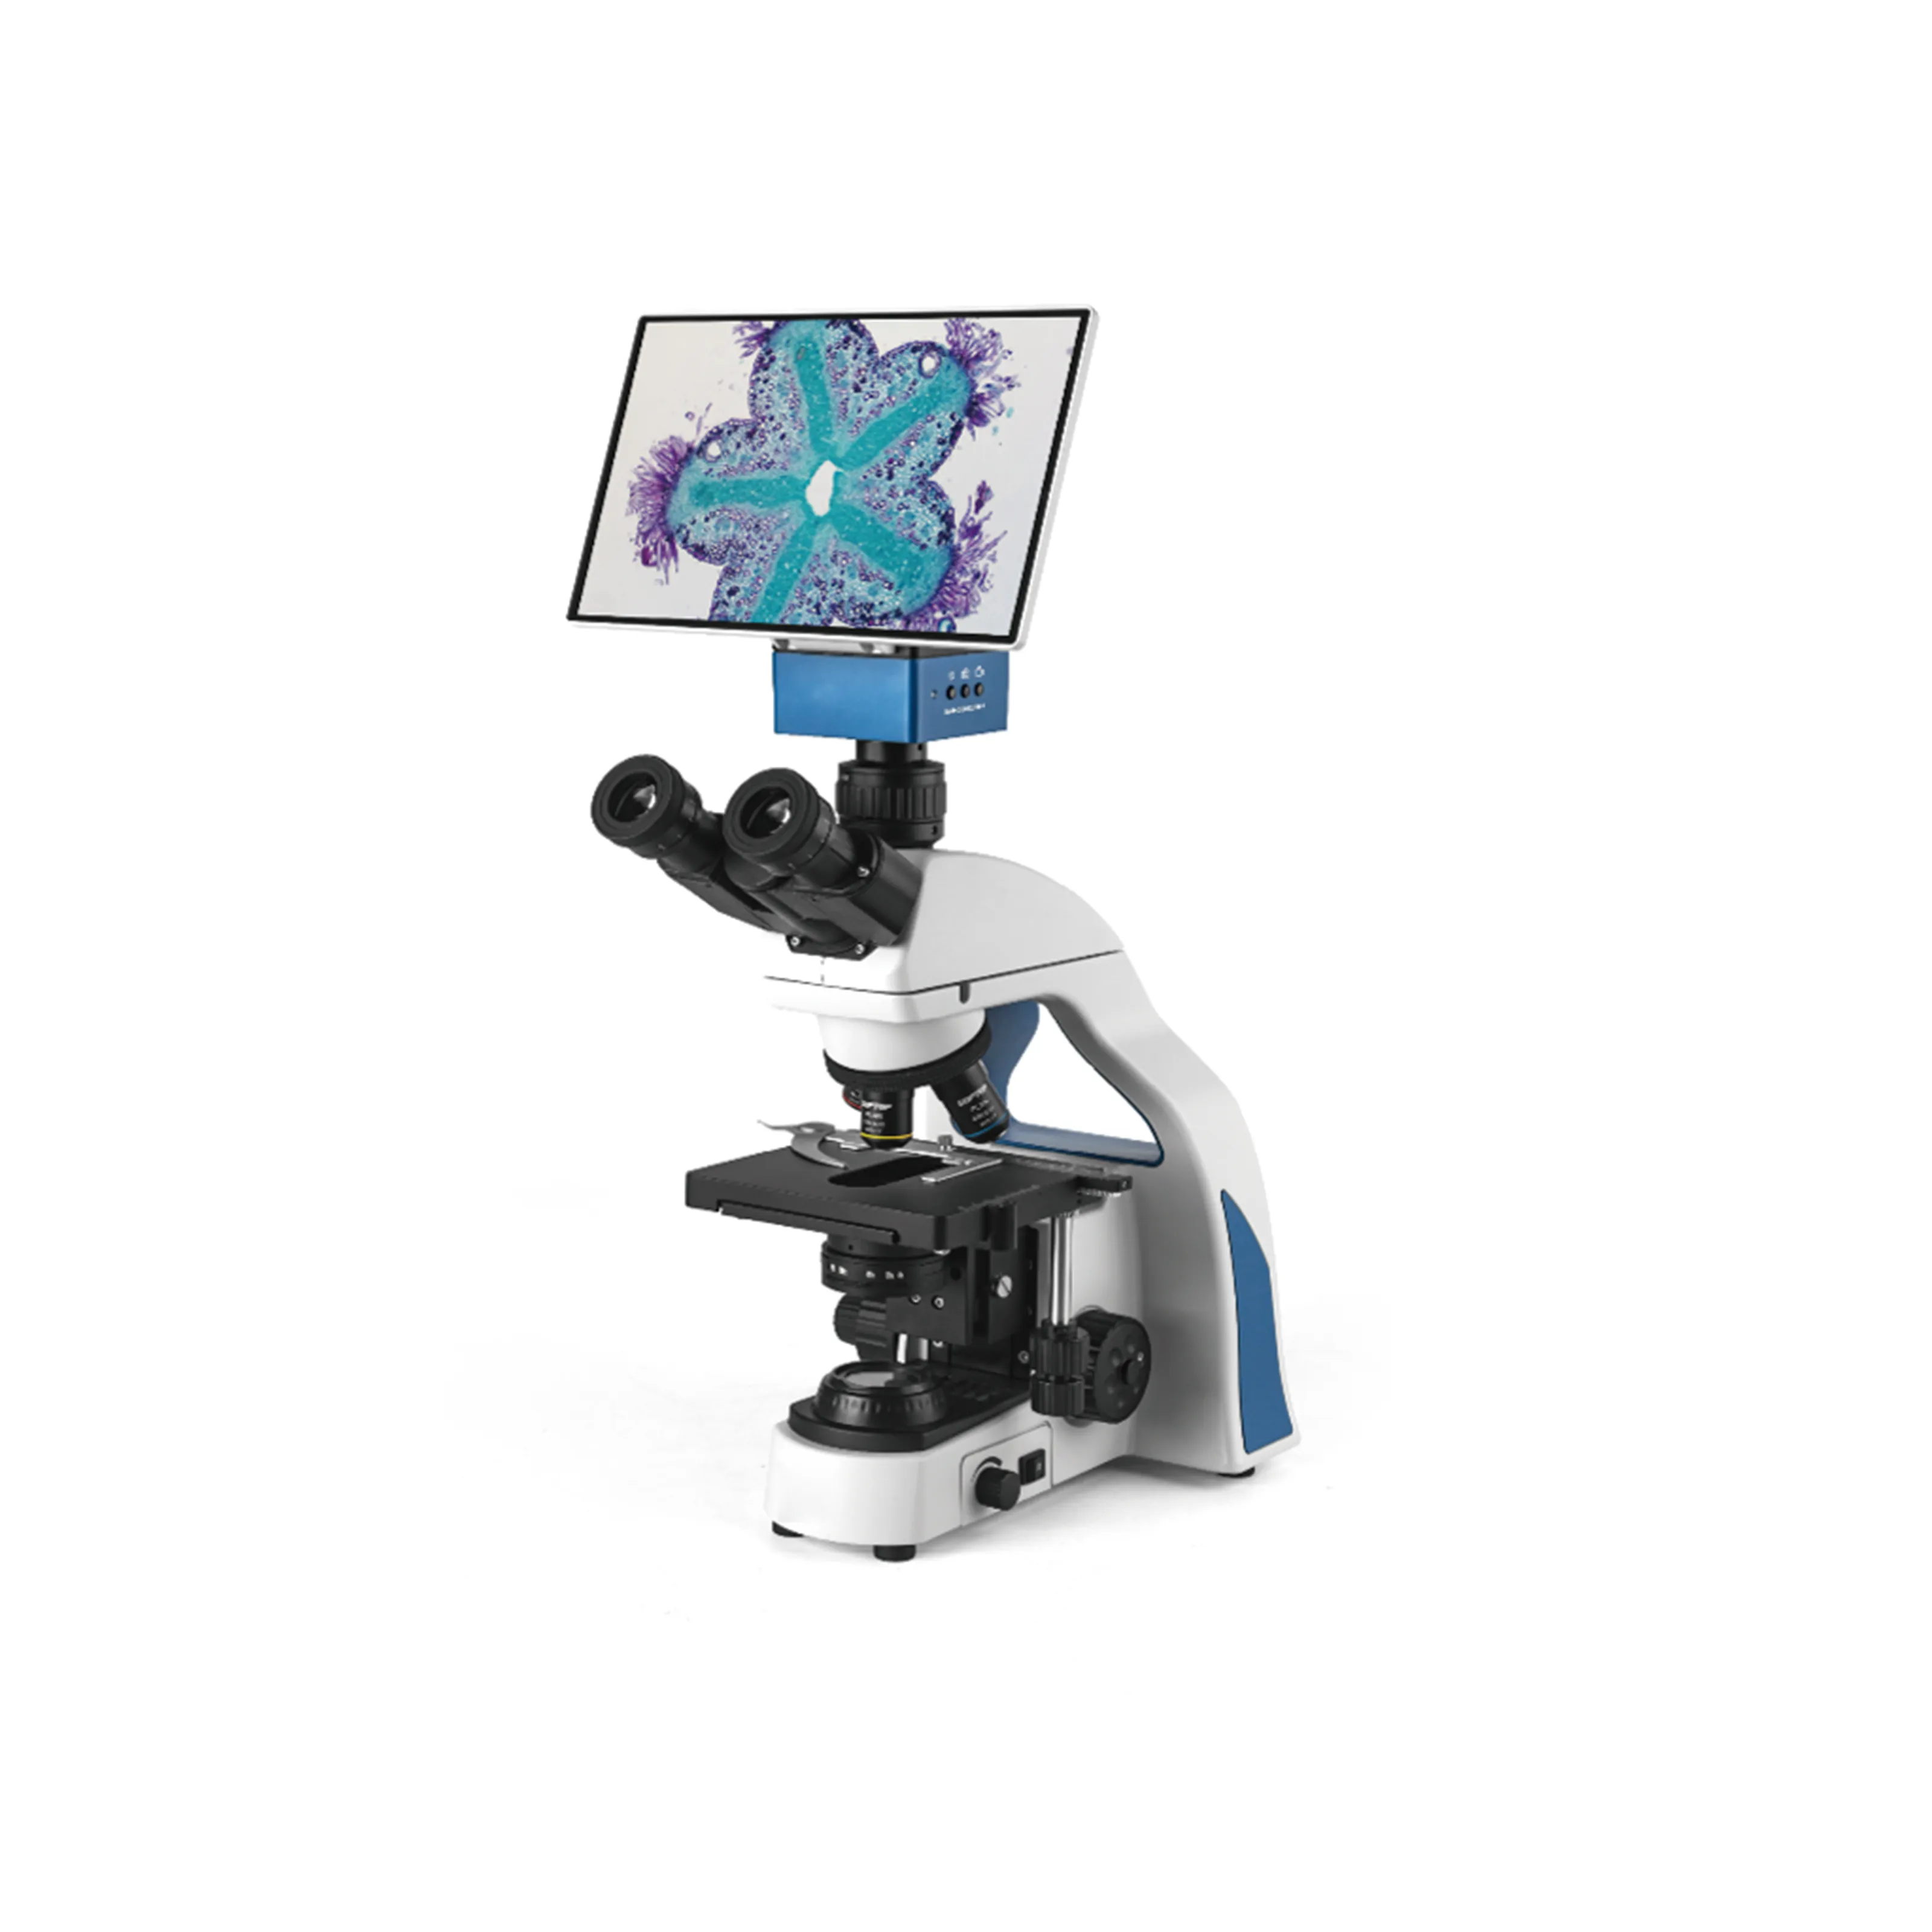 Digital Microscope Camera